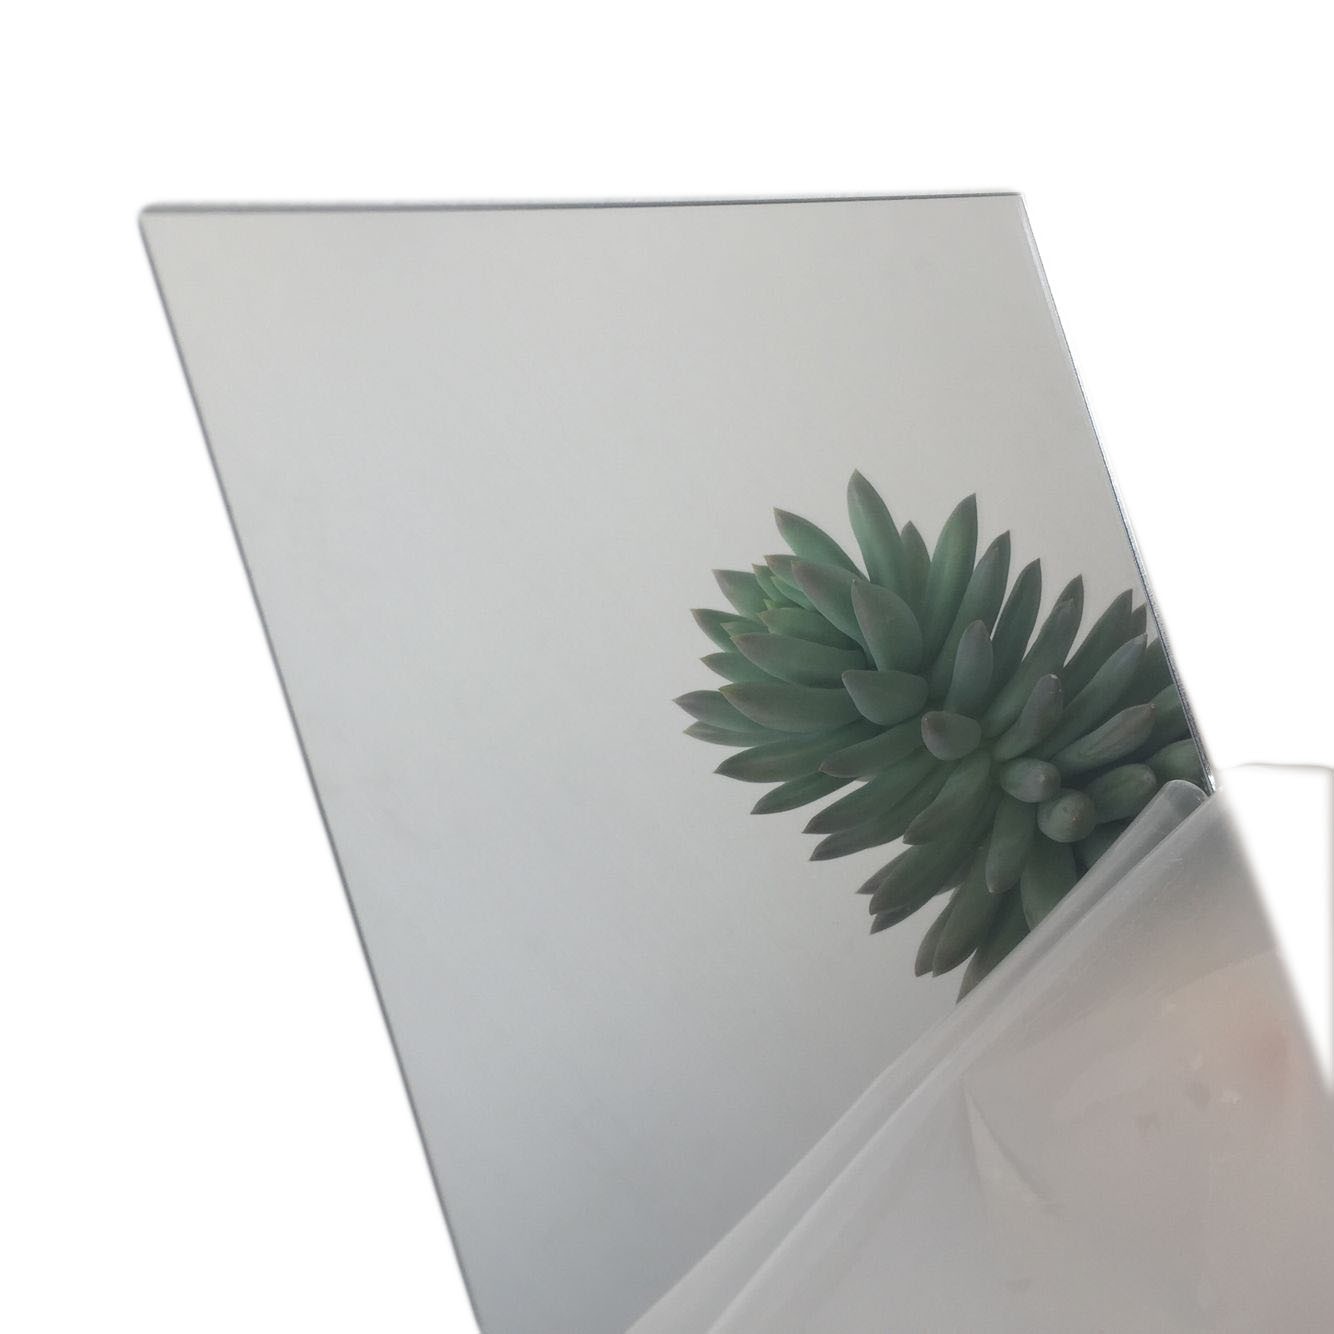 1mm acrylic self adhesive mirror sheet Manufacturers, 1mm acrylic self adhesive mirror sheet Factory, Supply 1mm acrylic self adhesive mirror sheet